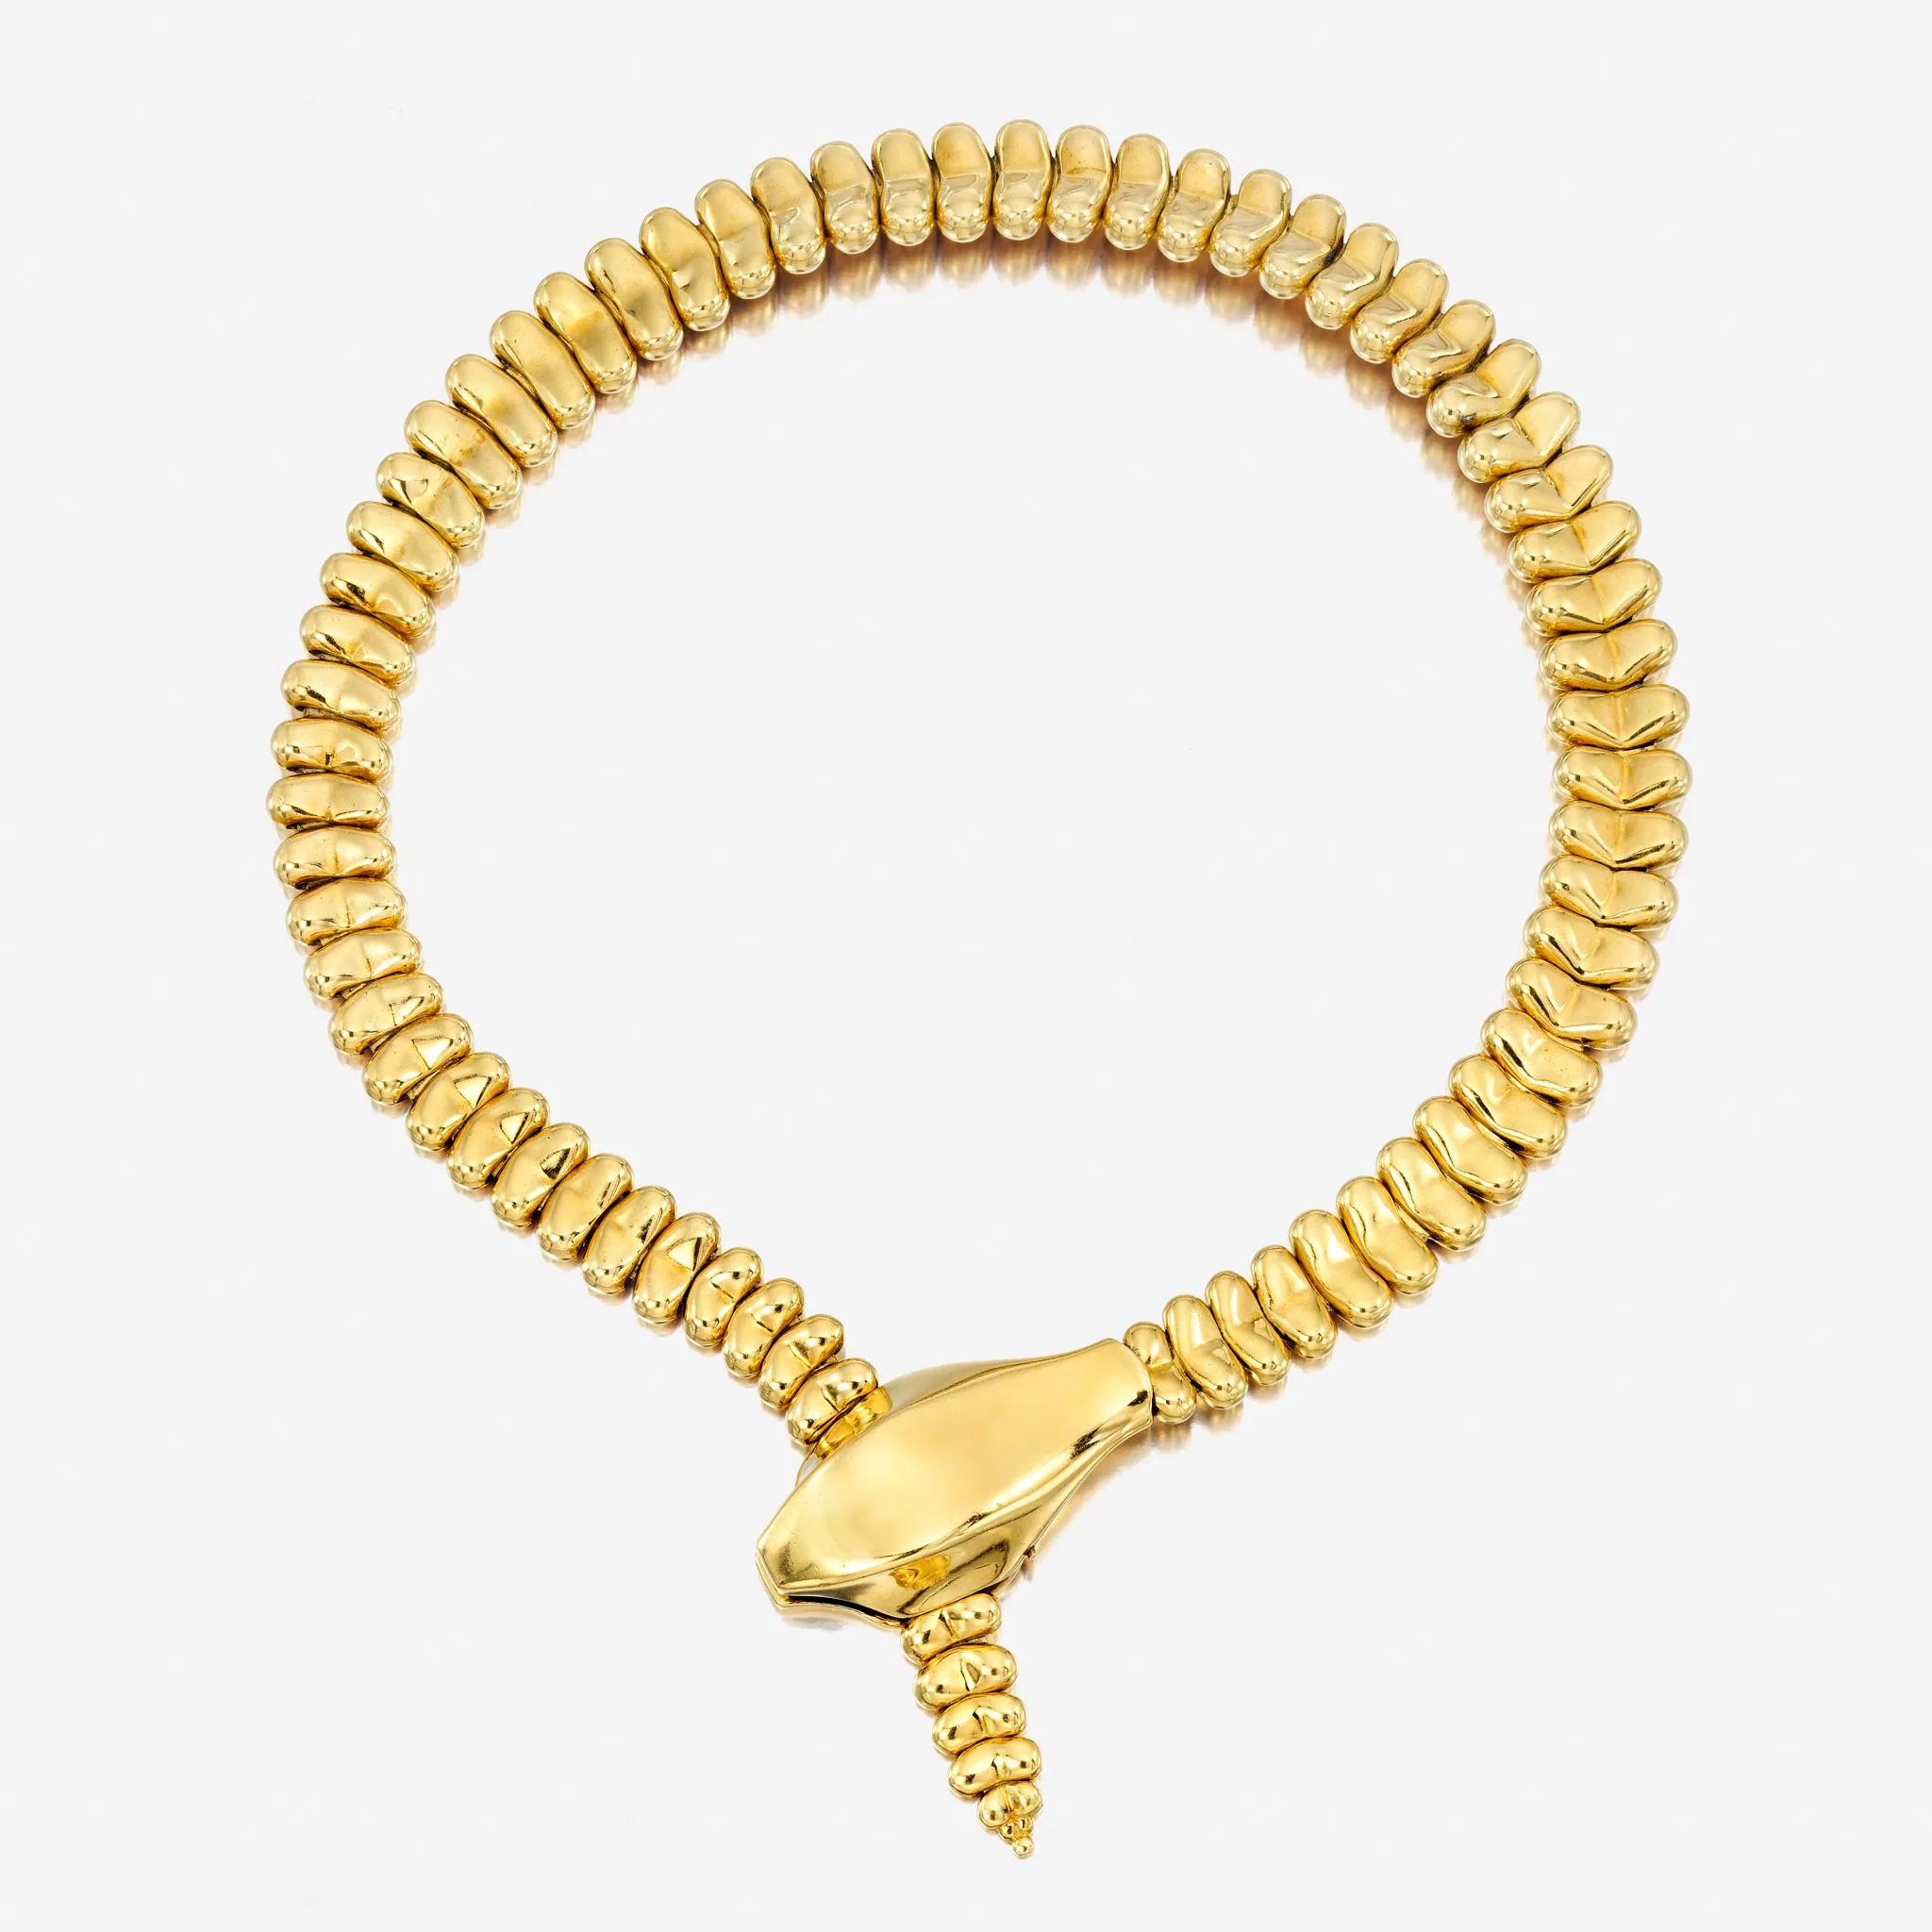 18K gold necklace, Tiffany & Elsa Peretti, 1985, $15,000 plus buyer's premium. Image courtesy Freeman's